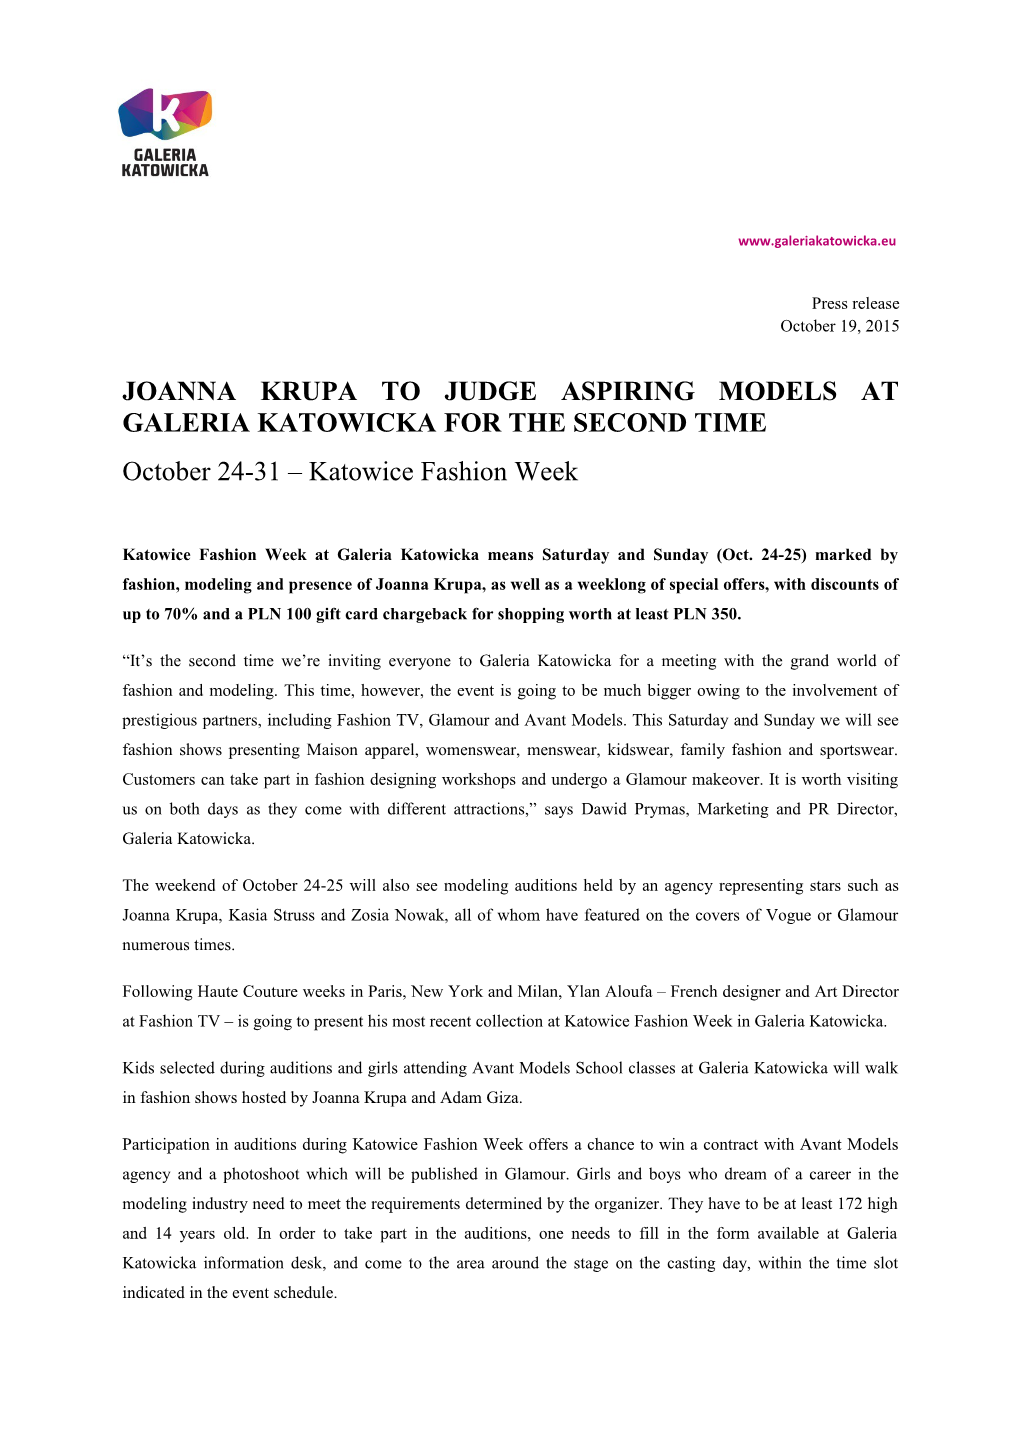 Joanna Krupa to Judge Aspiring Models at Galeria Katowicka for the Second Time